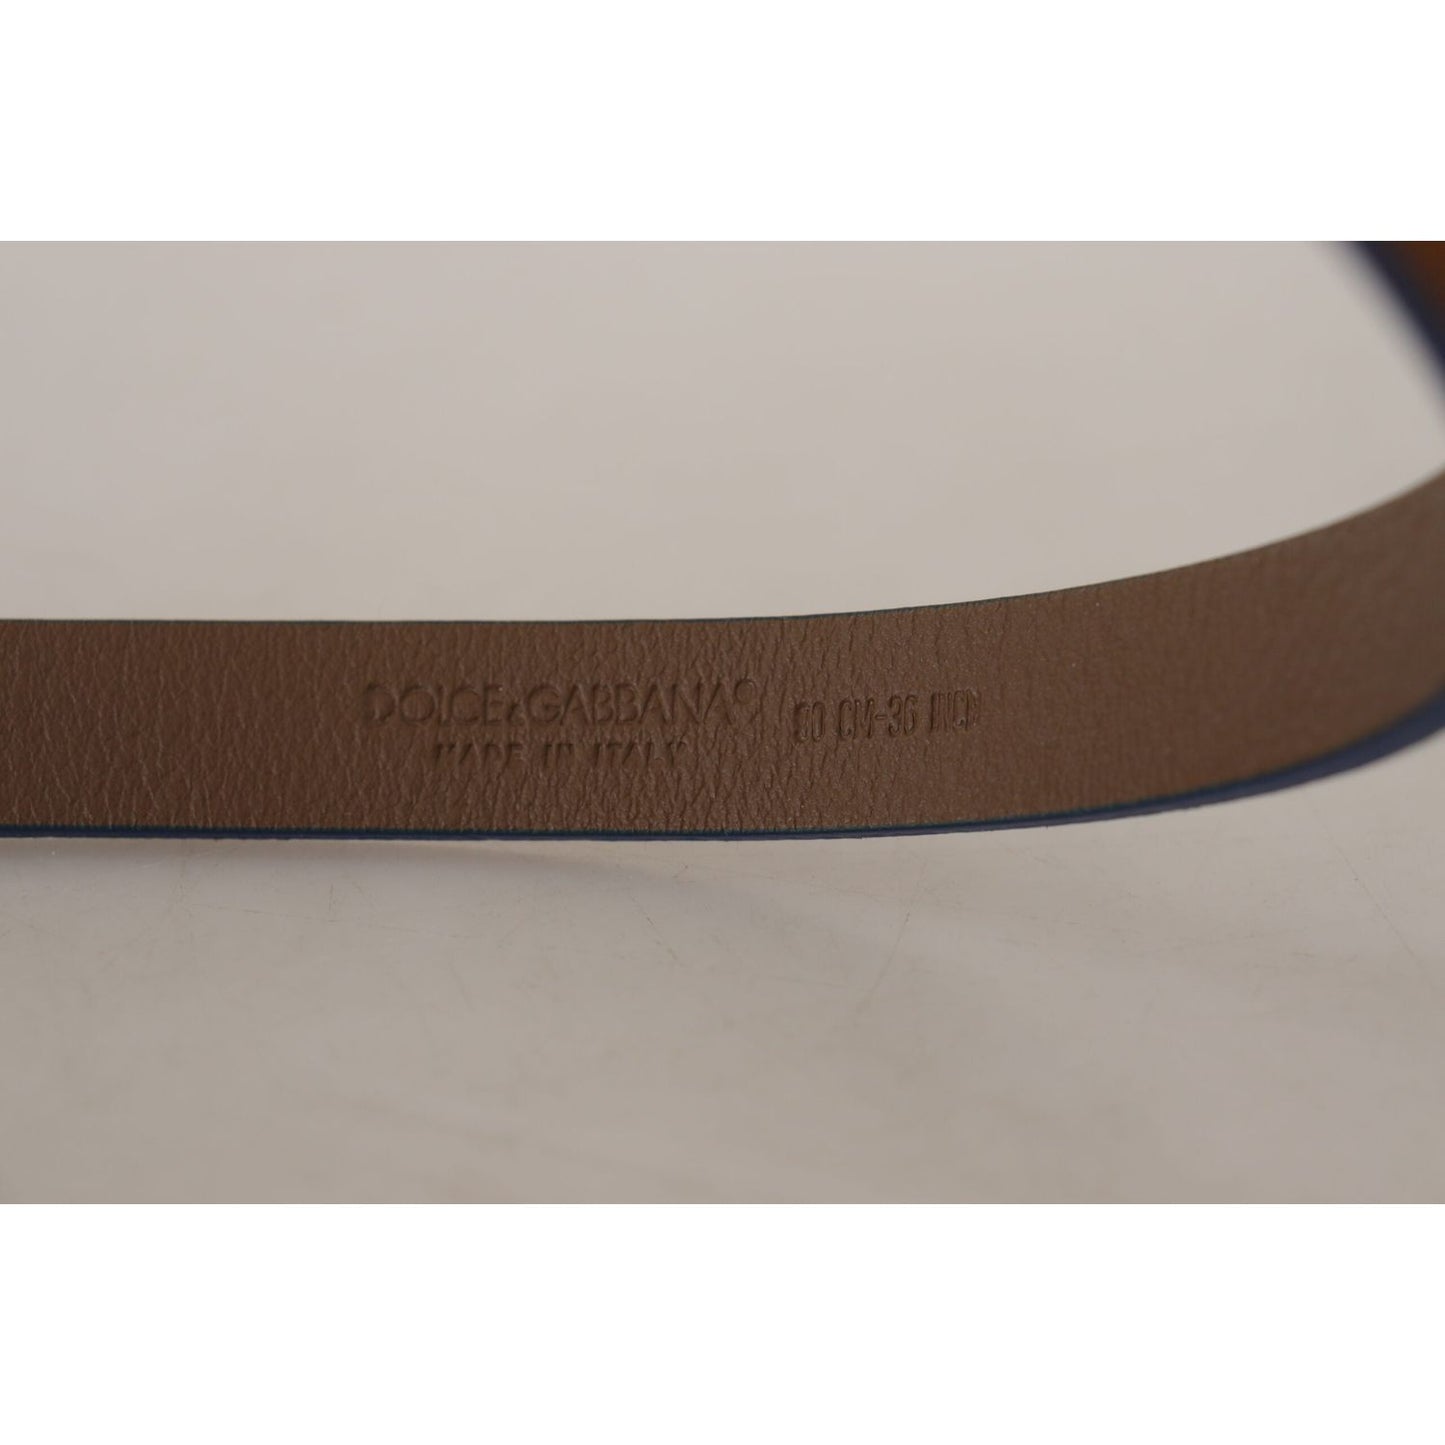 Dolce & Gabbana Elegant Suede Leather Belt with Logo Engraved Buckle dark-brown-blue-leather-gold-metal-buckle-belt